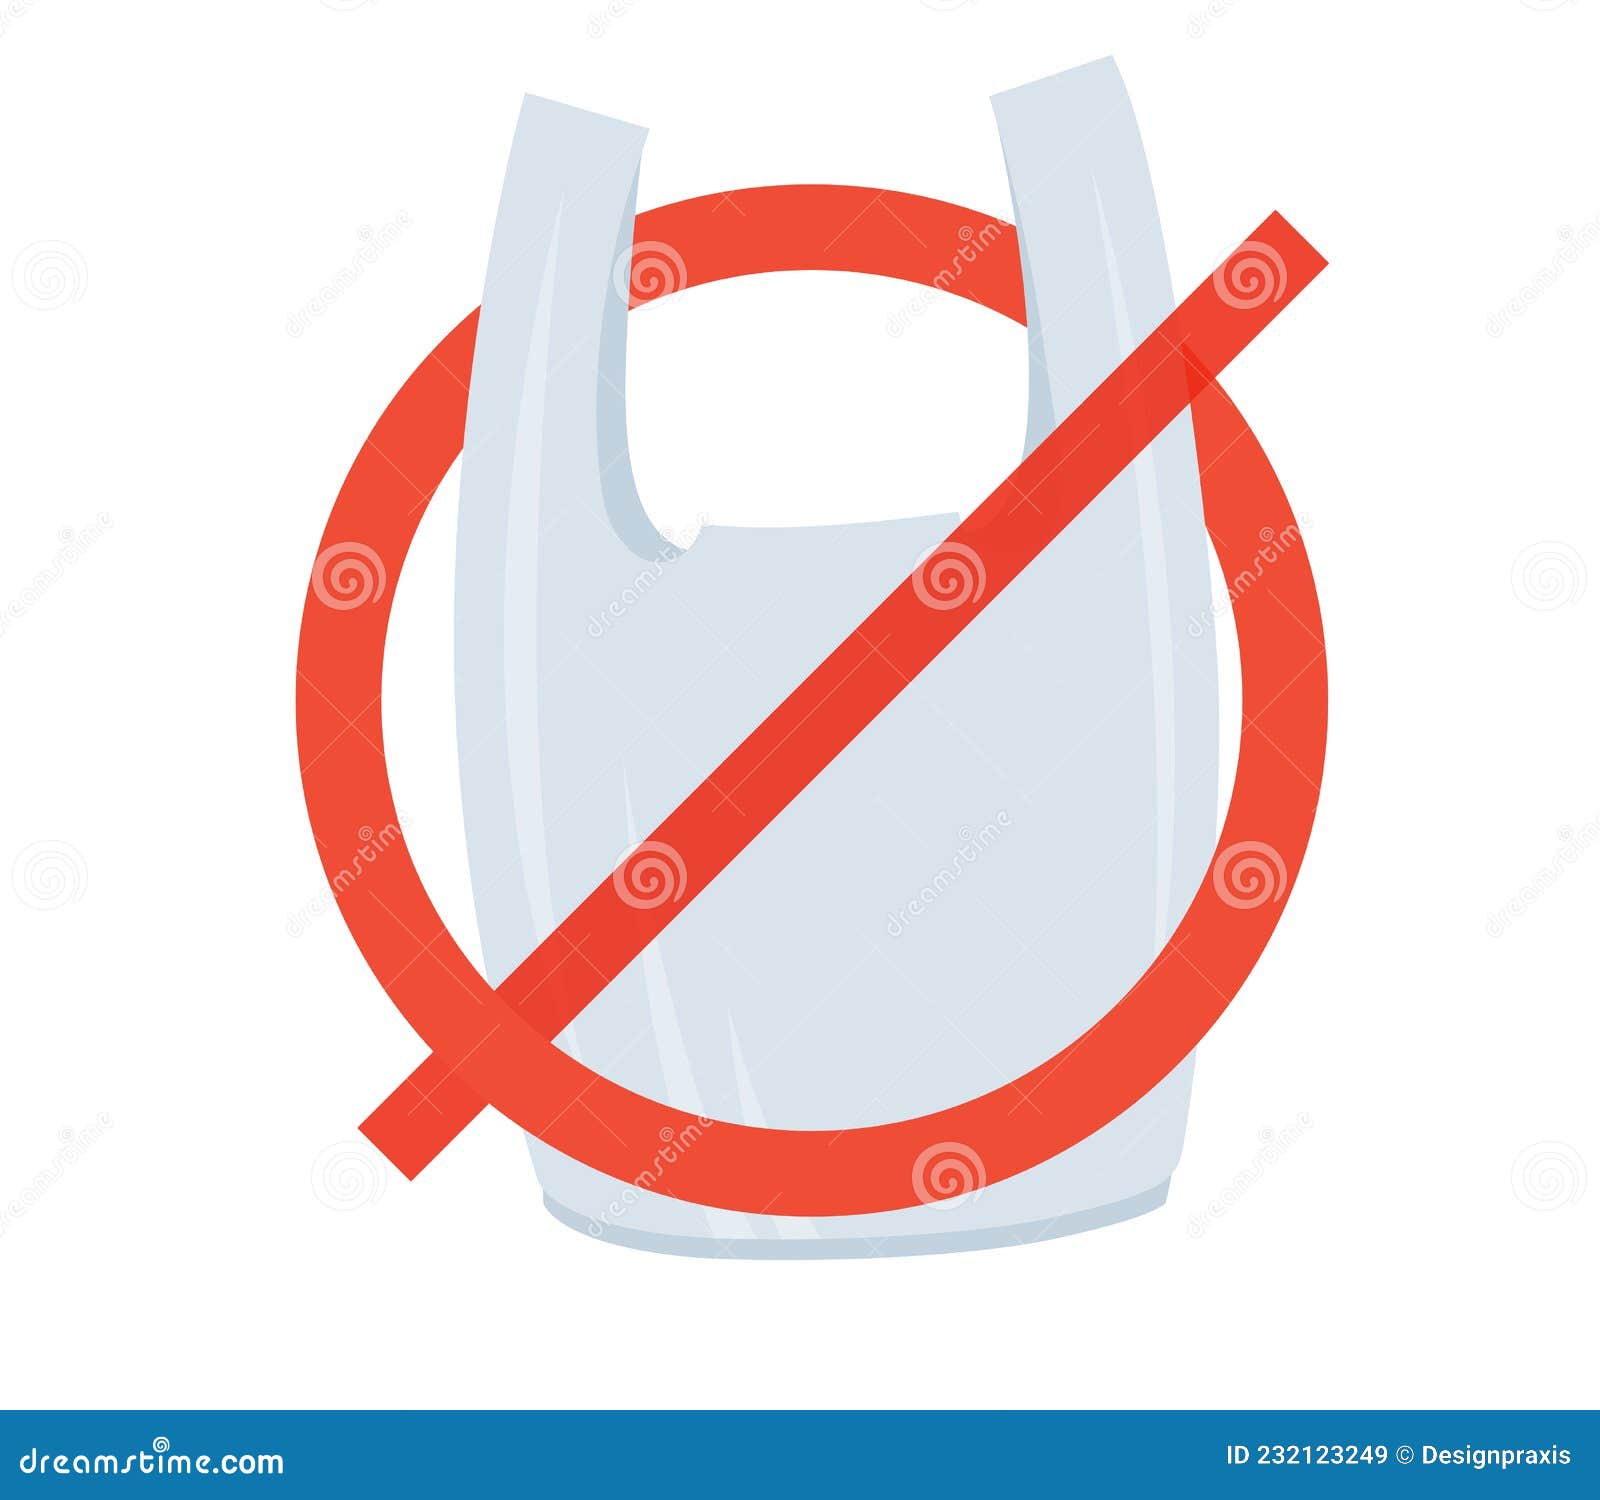 Say No To Plastic Bag - Illustration Stock Vector - Illustration of ...